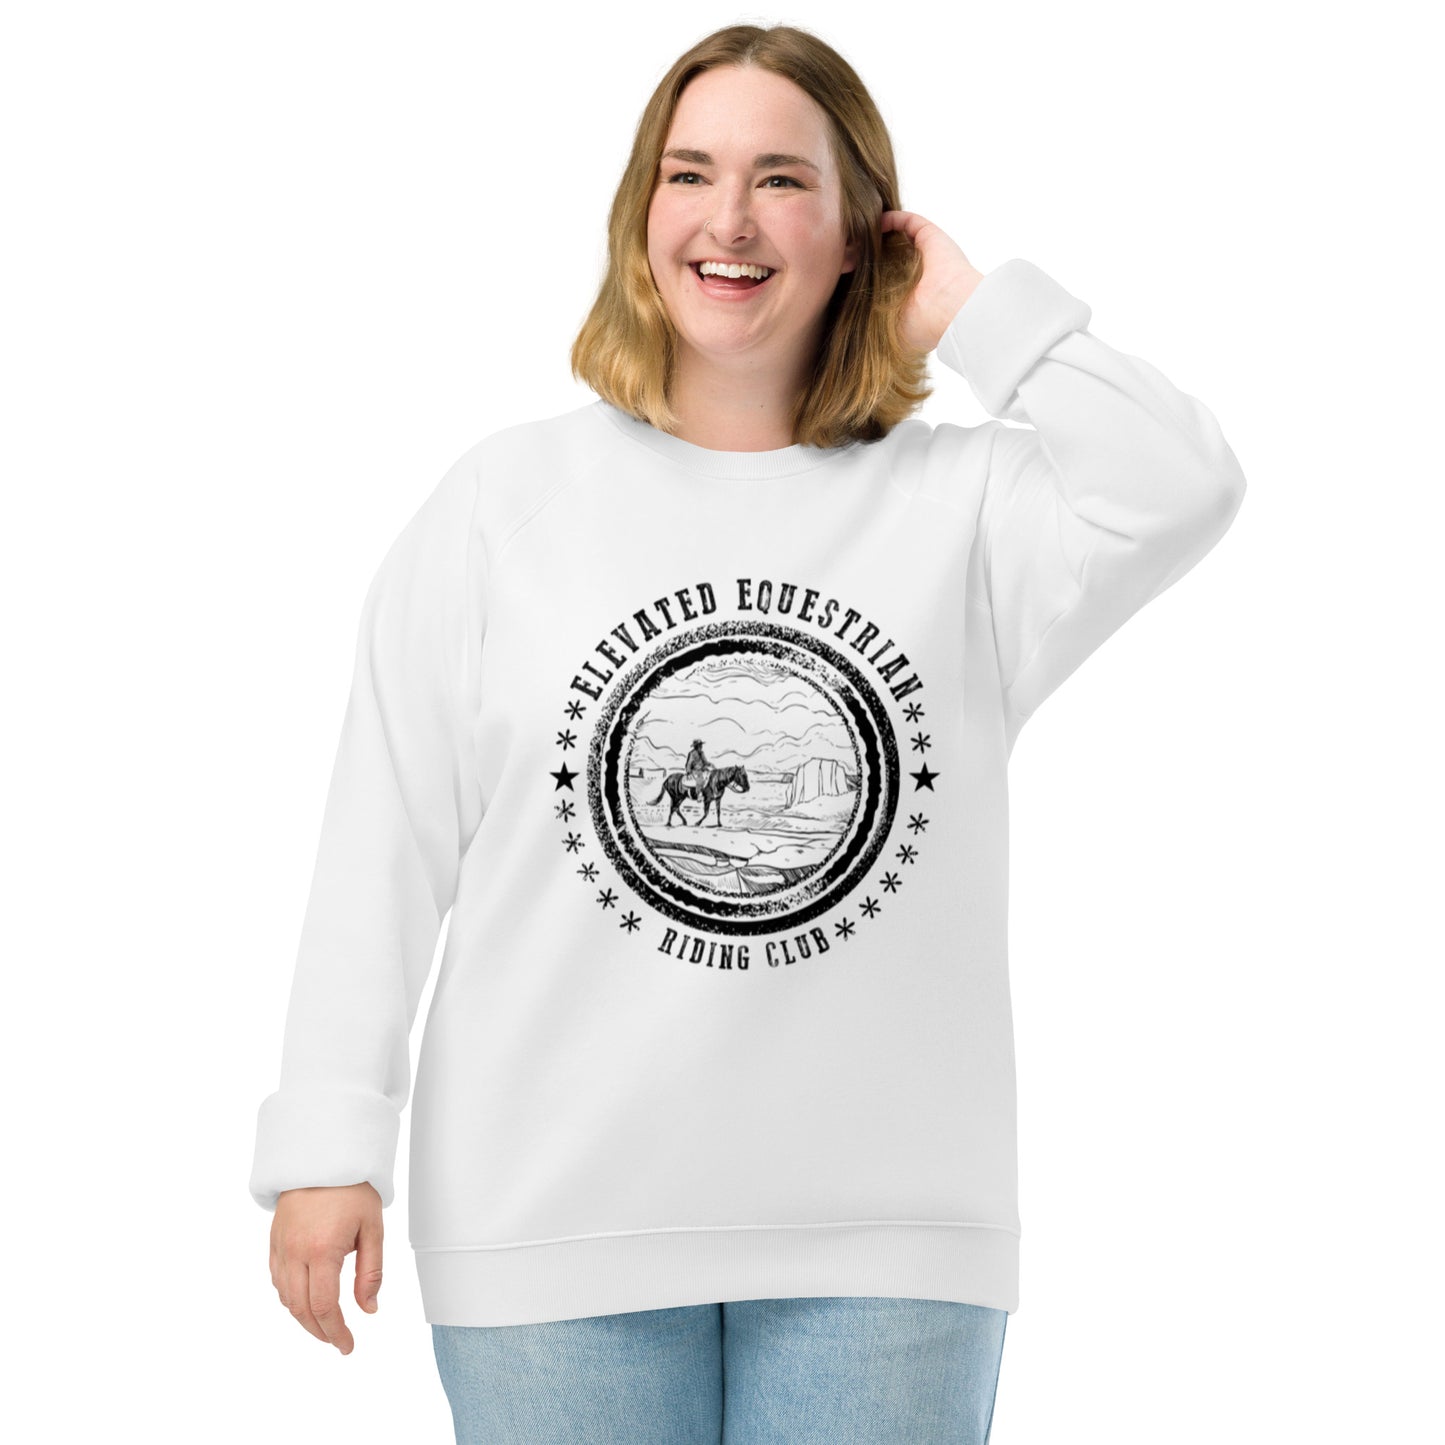 Elevated Equestrian Riding Club White Unisex Organic Crewneck Sweatshirt